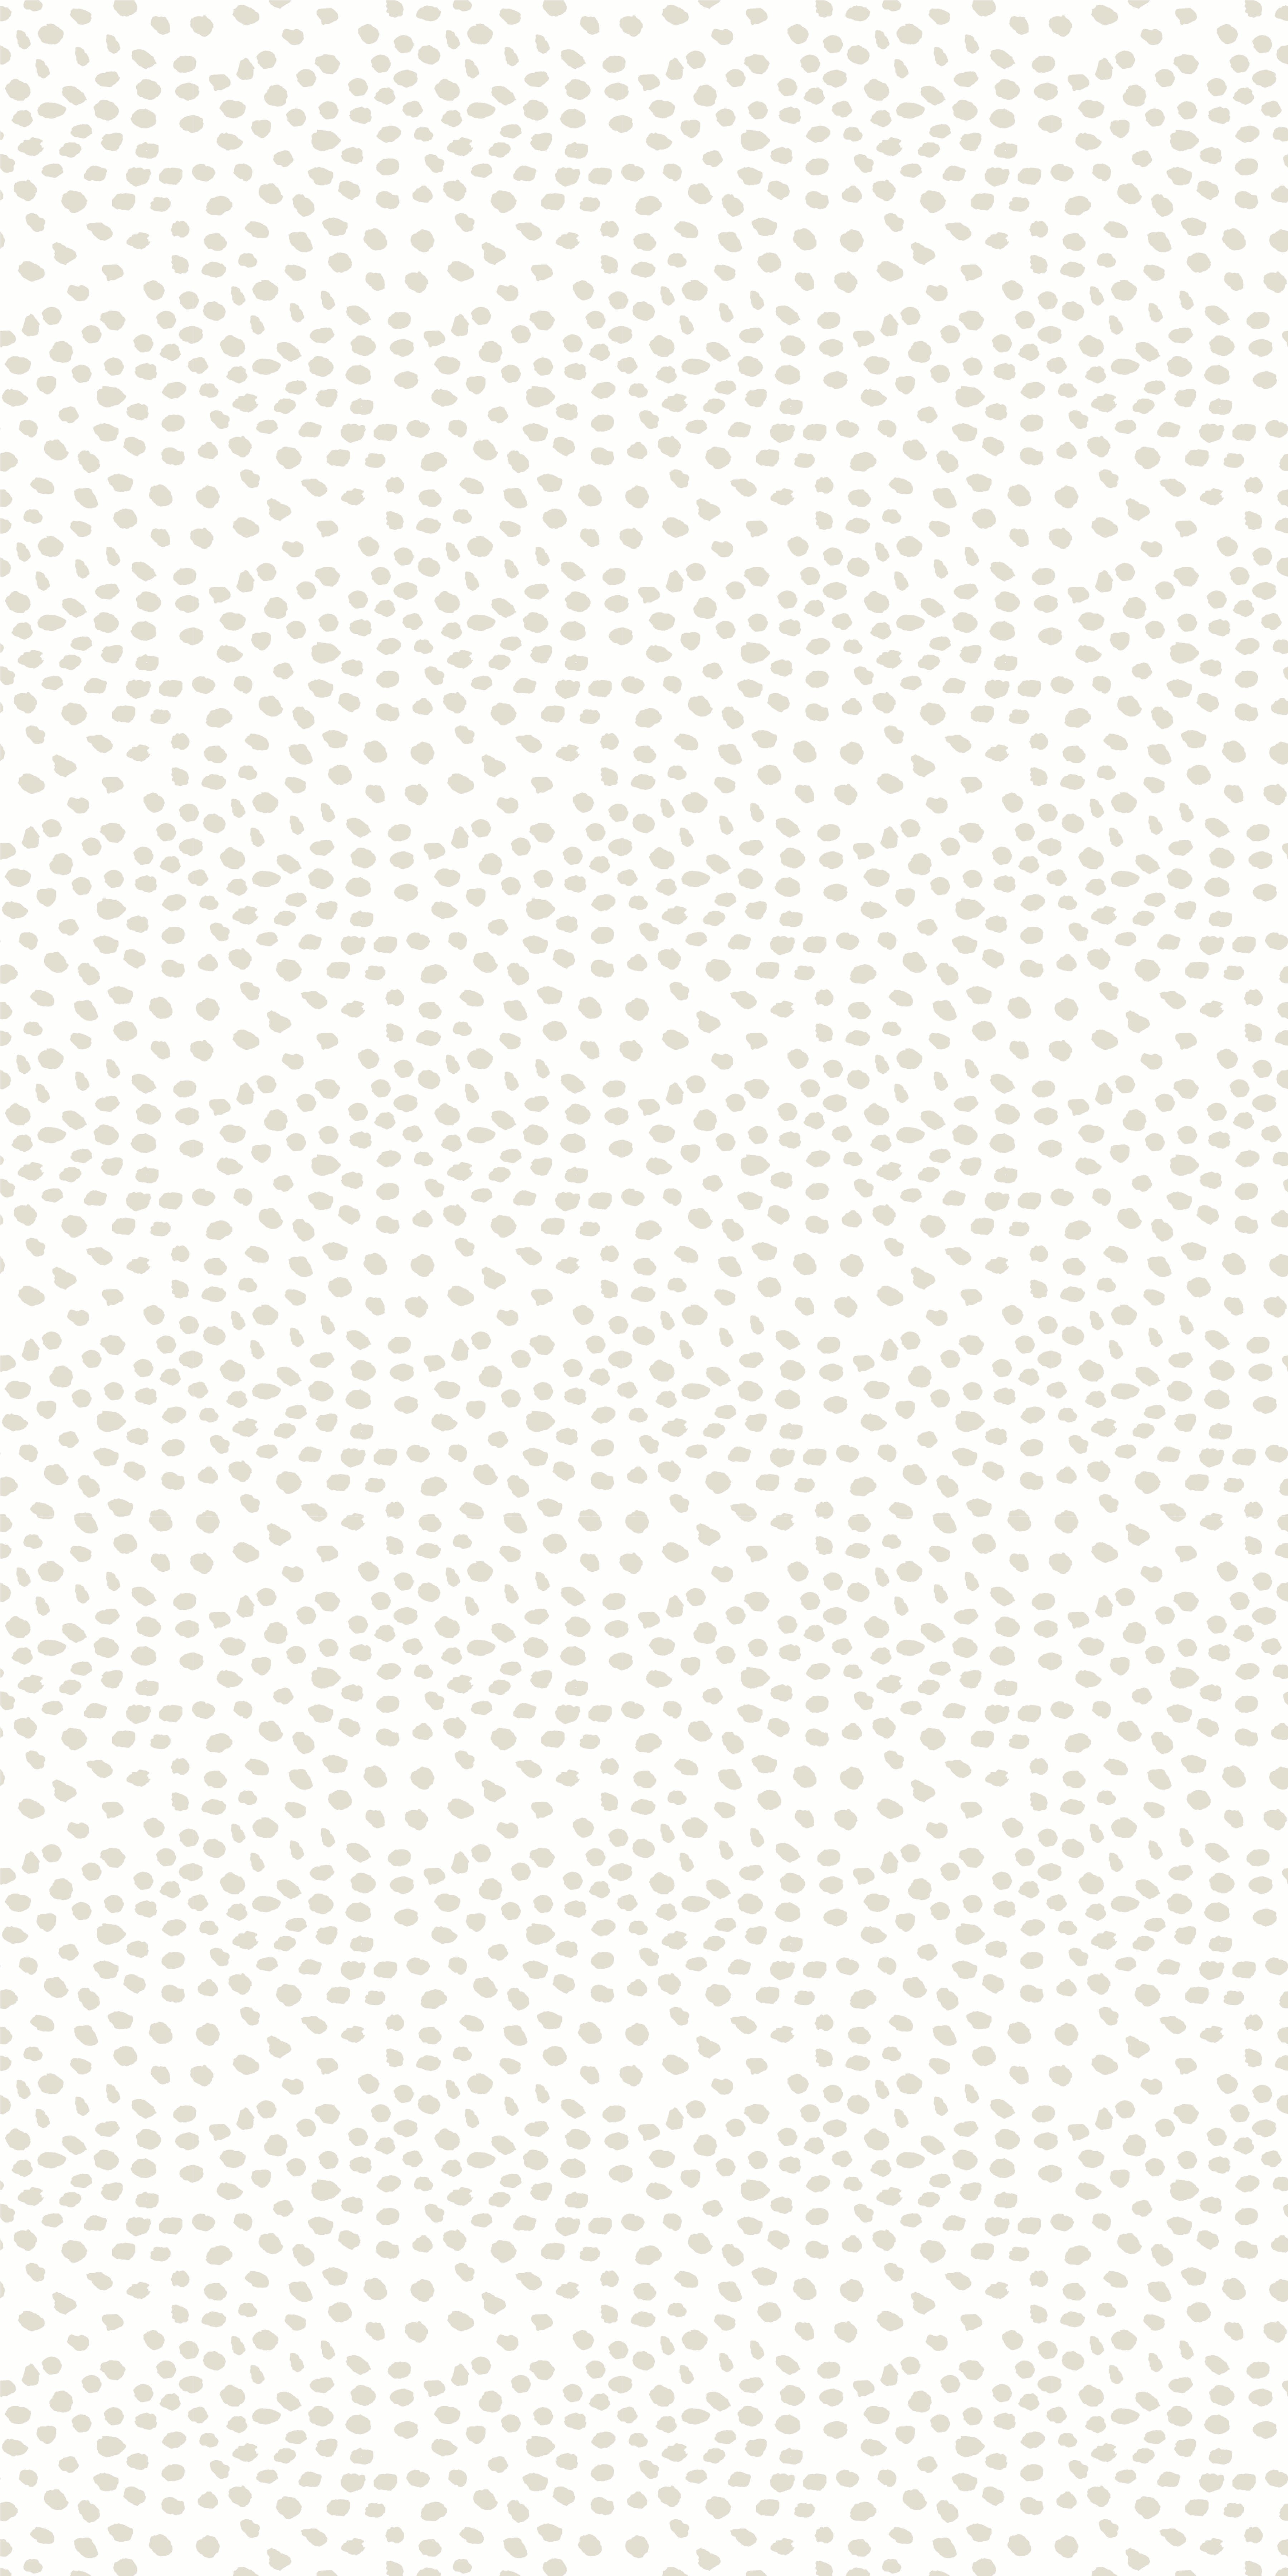 Dot Shell Peel & Stick Wallpaper - 2' x 10' - Image 1